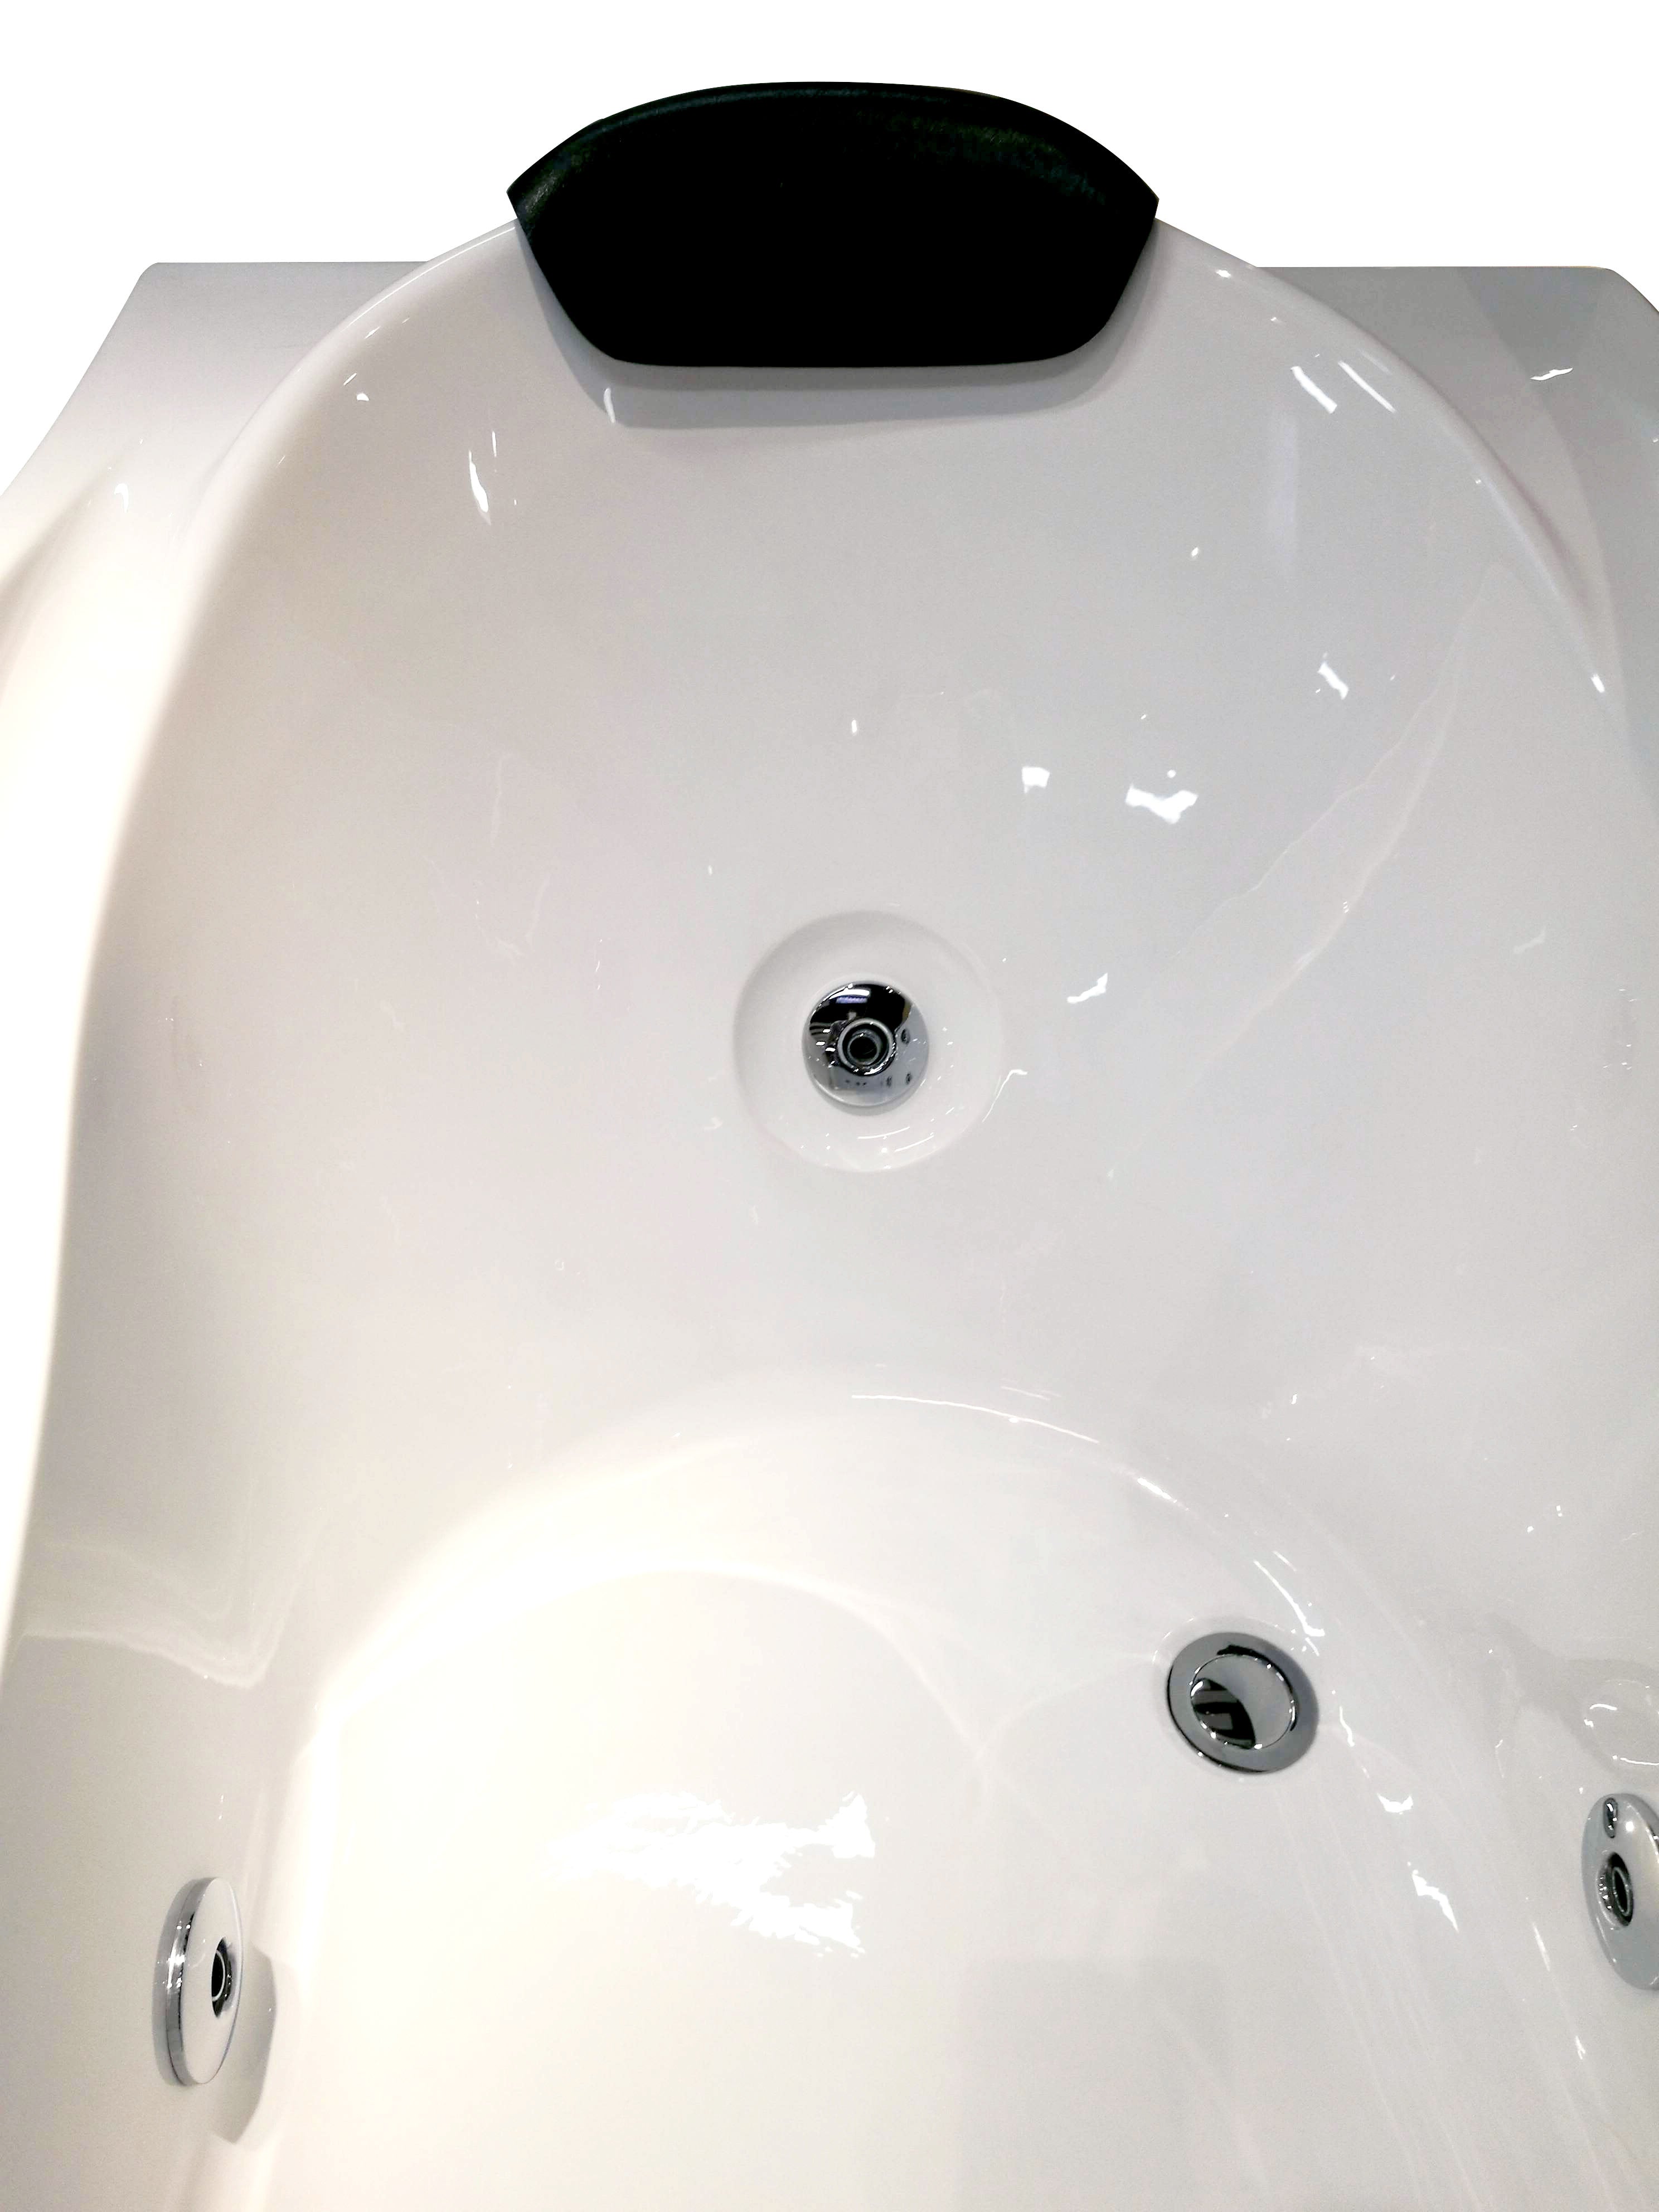 Eago AM189ETL-R 6 ft Right Drain Acrylic Whirlpool Bathtub w/ Fixtures